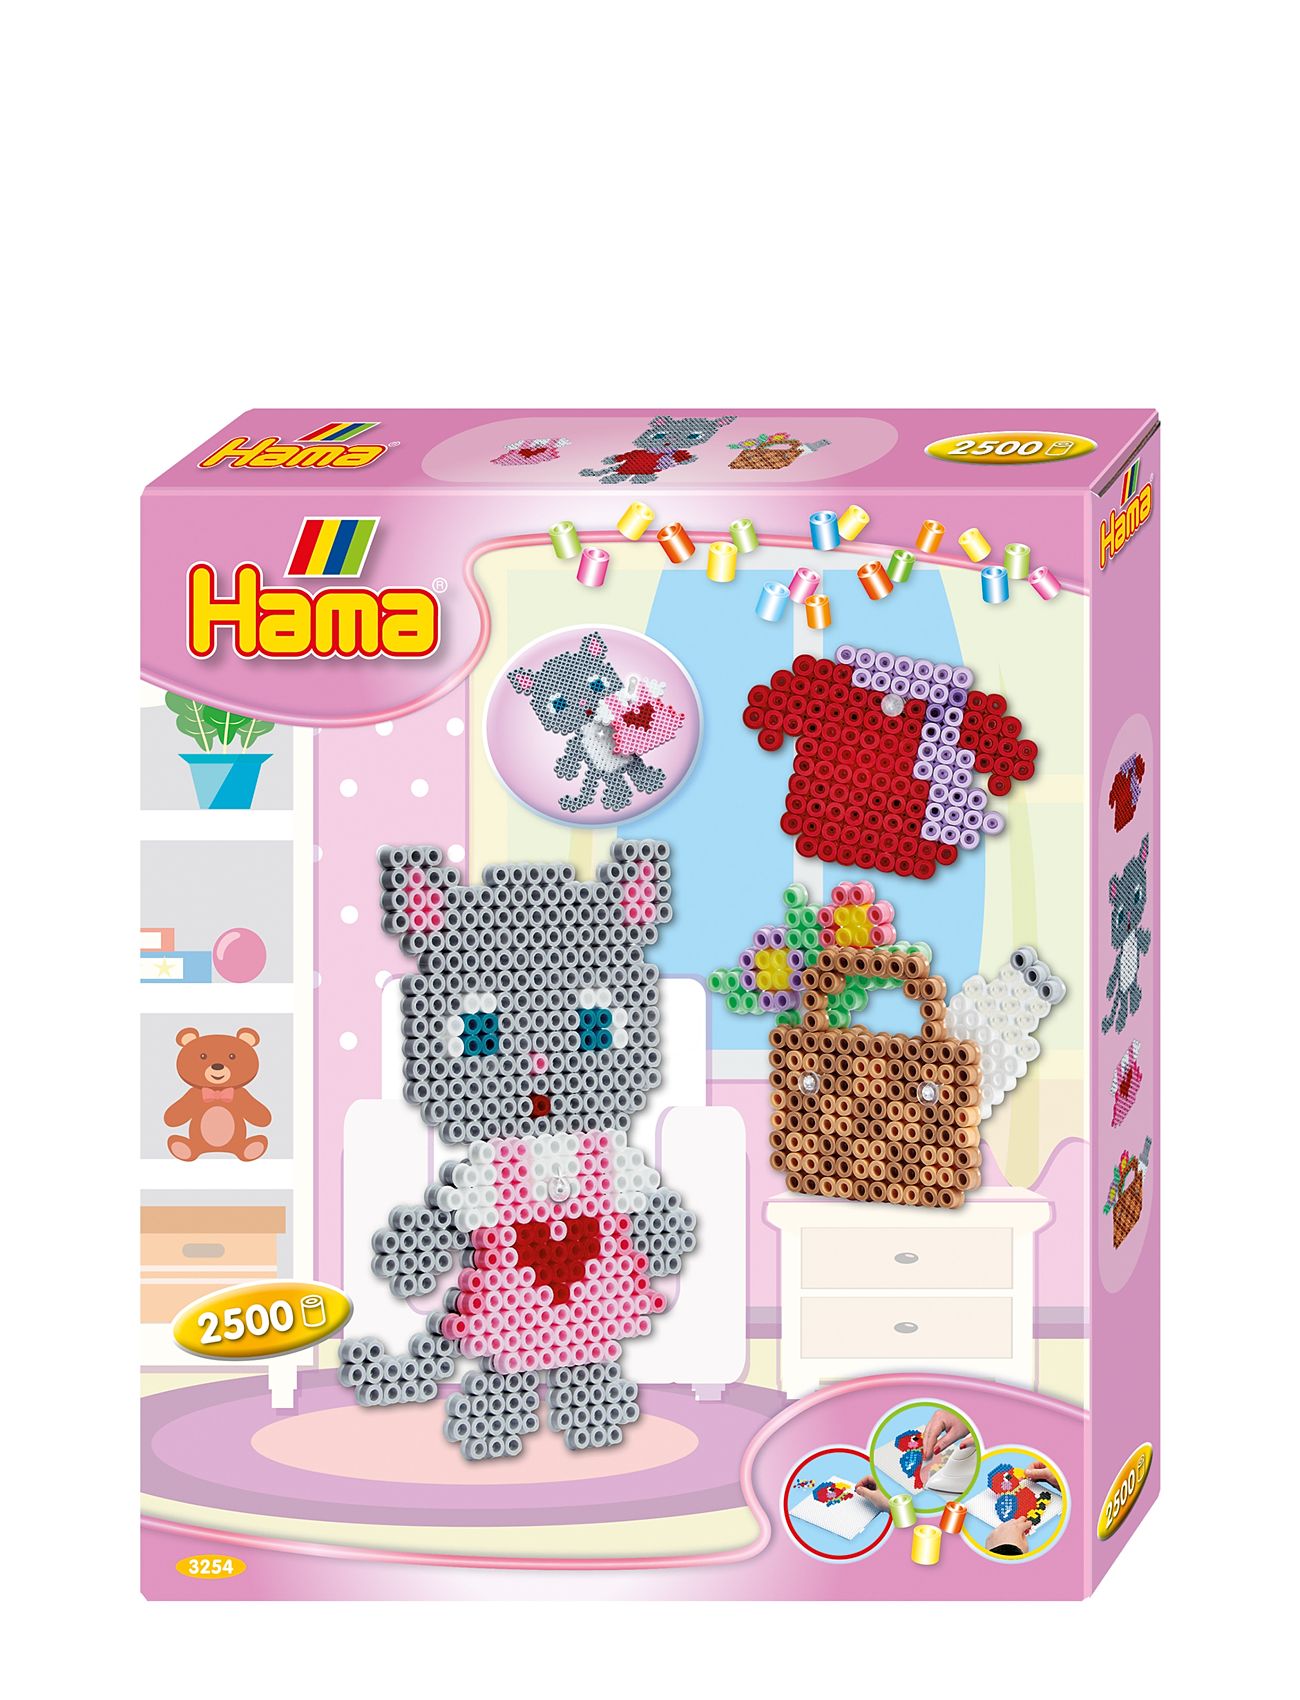 Hama Midi Gift Box Dress Up Cat 2500 Pcs. Toys Creativity Drawing & Crafts Craft Pearls Multi/patterned Hama